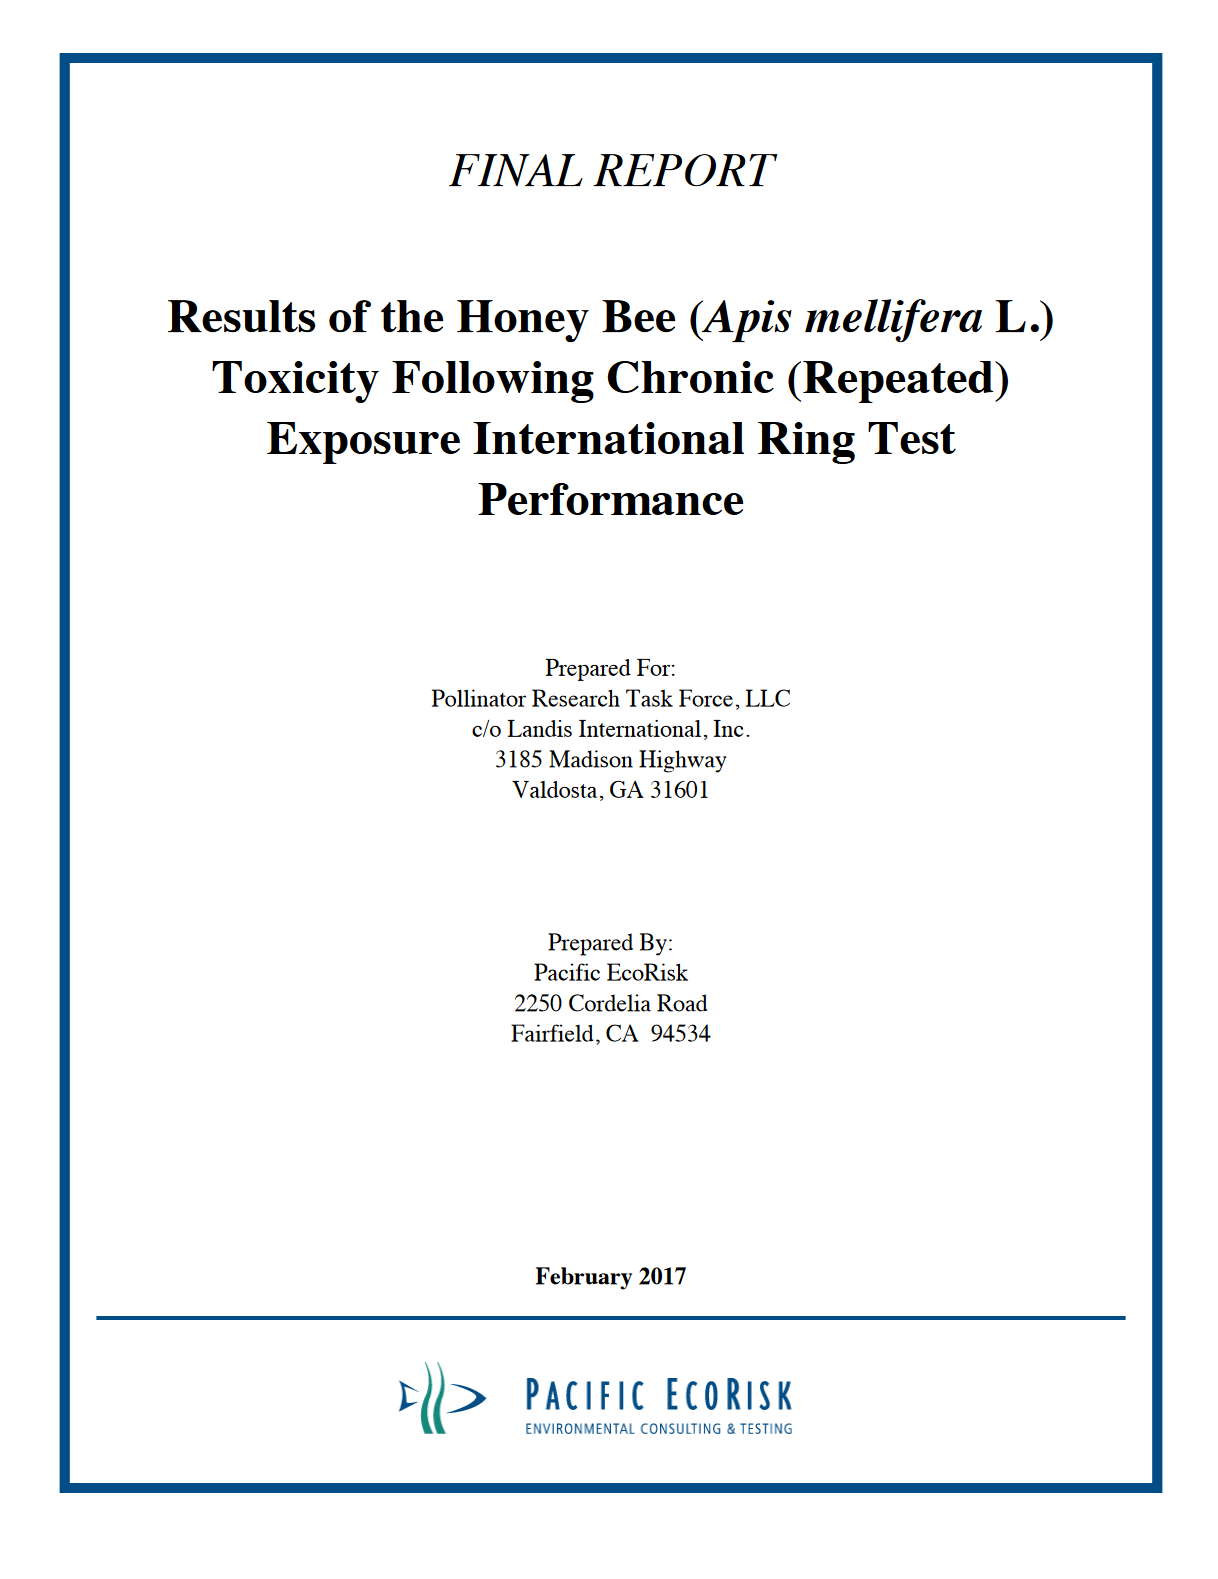 Honey-bee-toxicity-chronic-international-ring-test